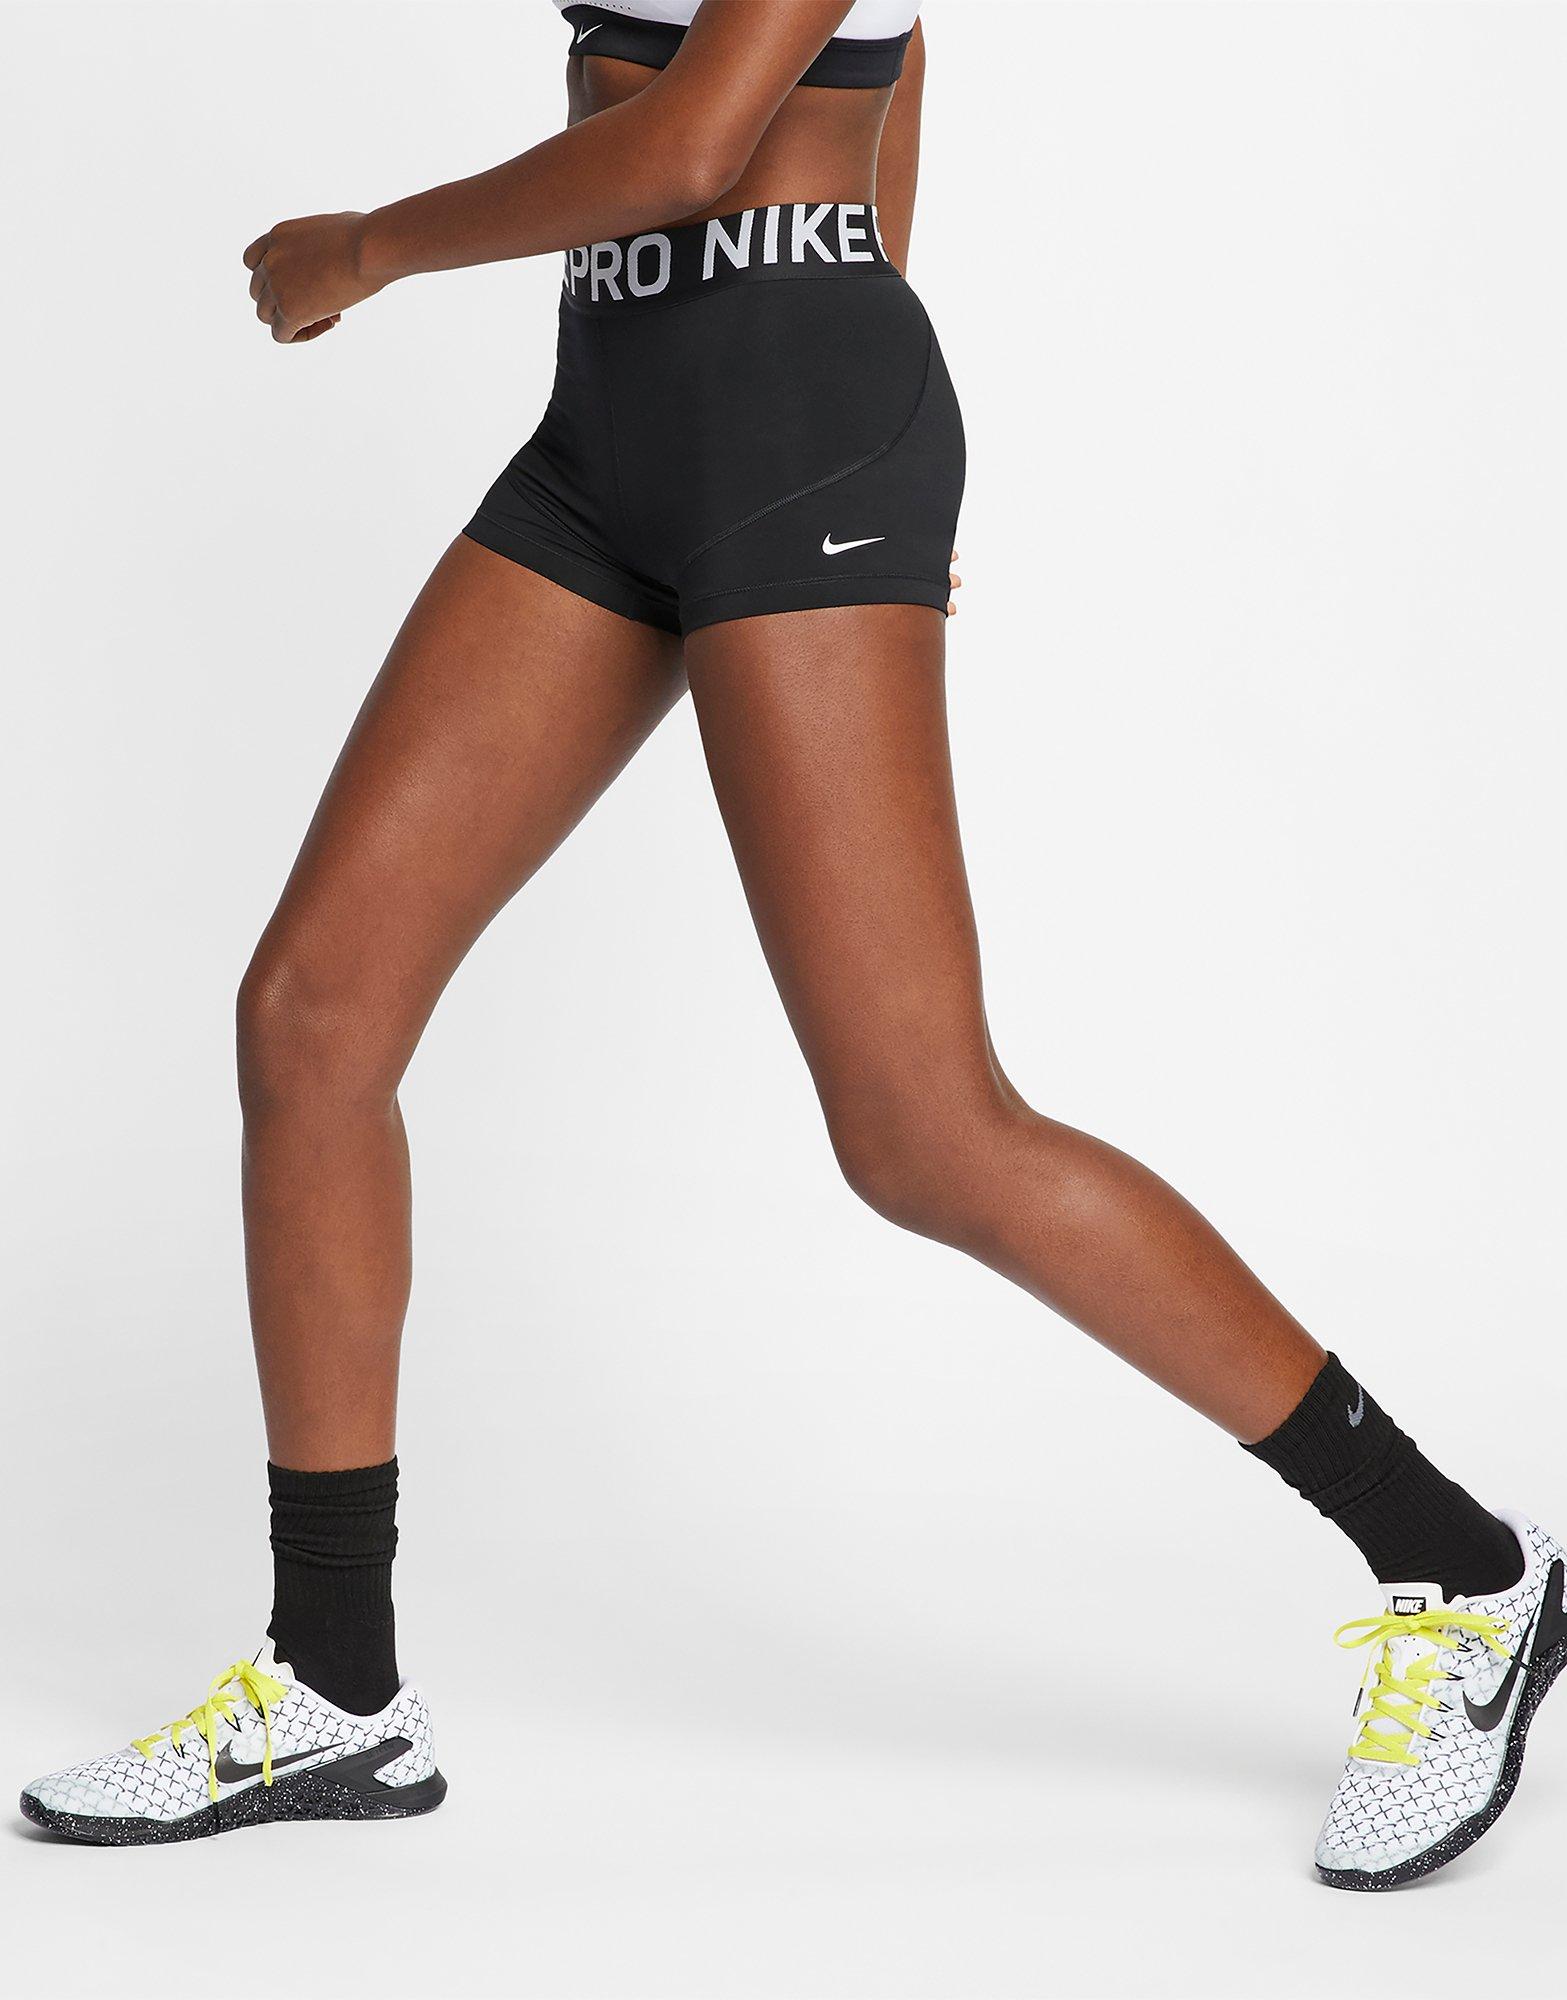 Buy Black Nike TPRO 3 SHORT